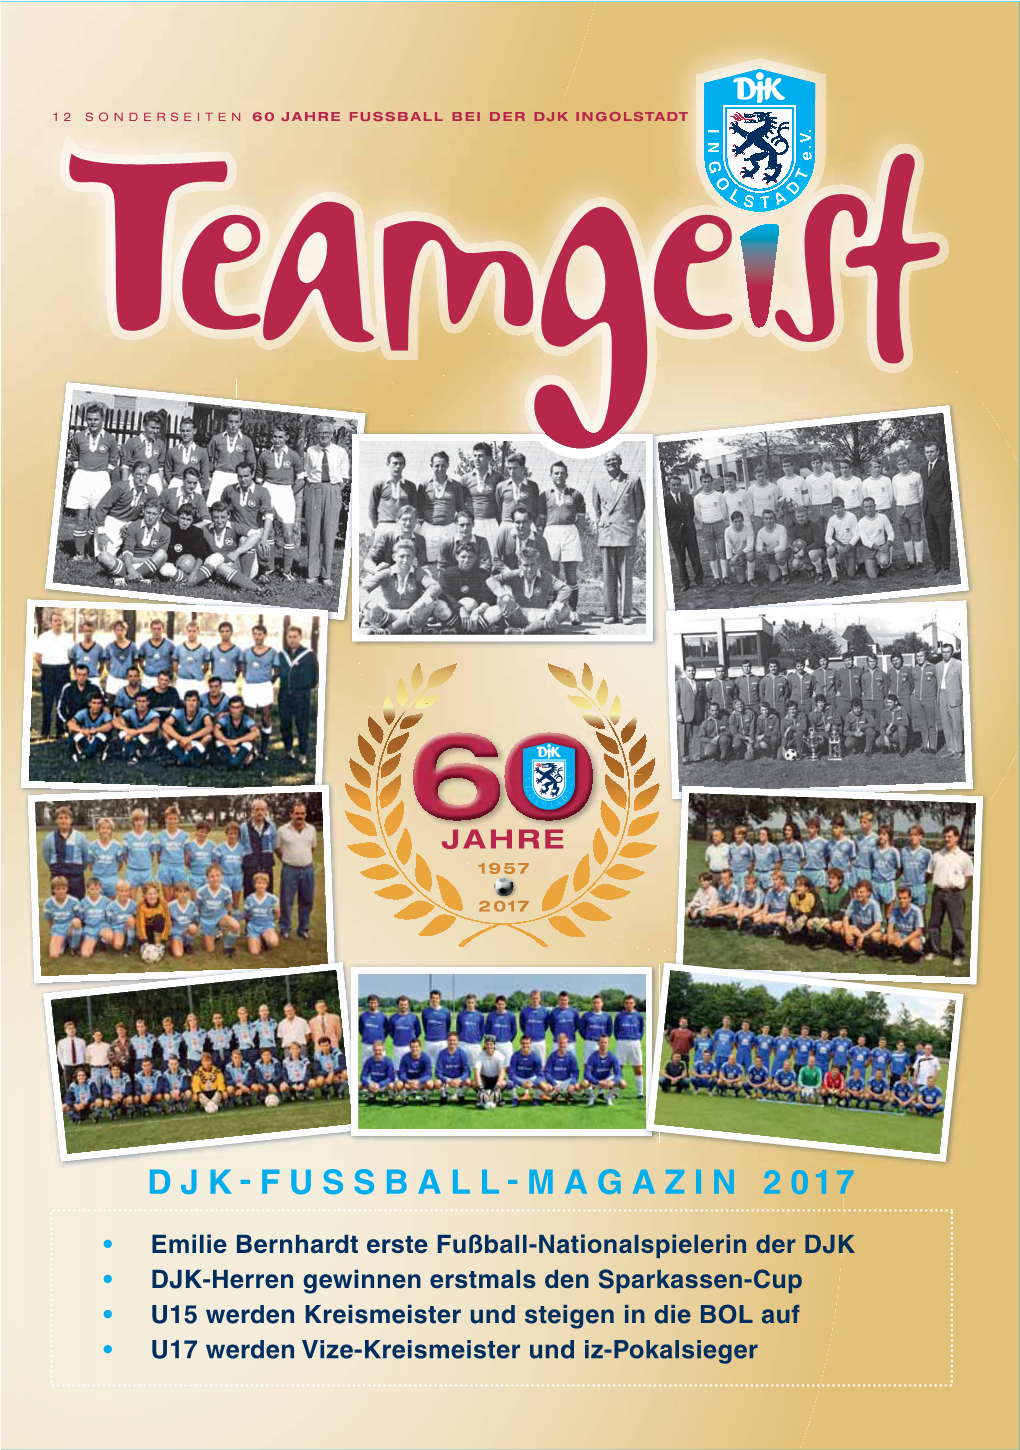 DJK-Fußball-Teamgeist 2017.Pdf